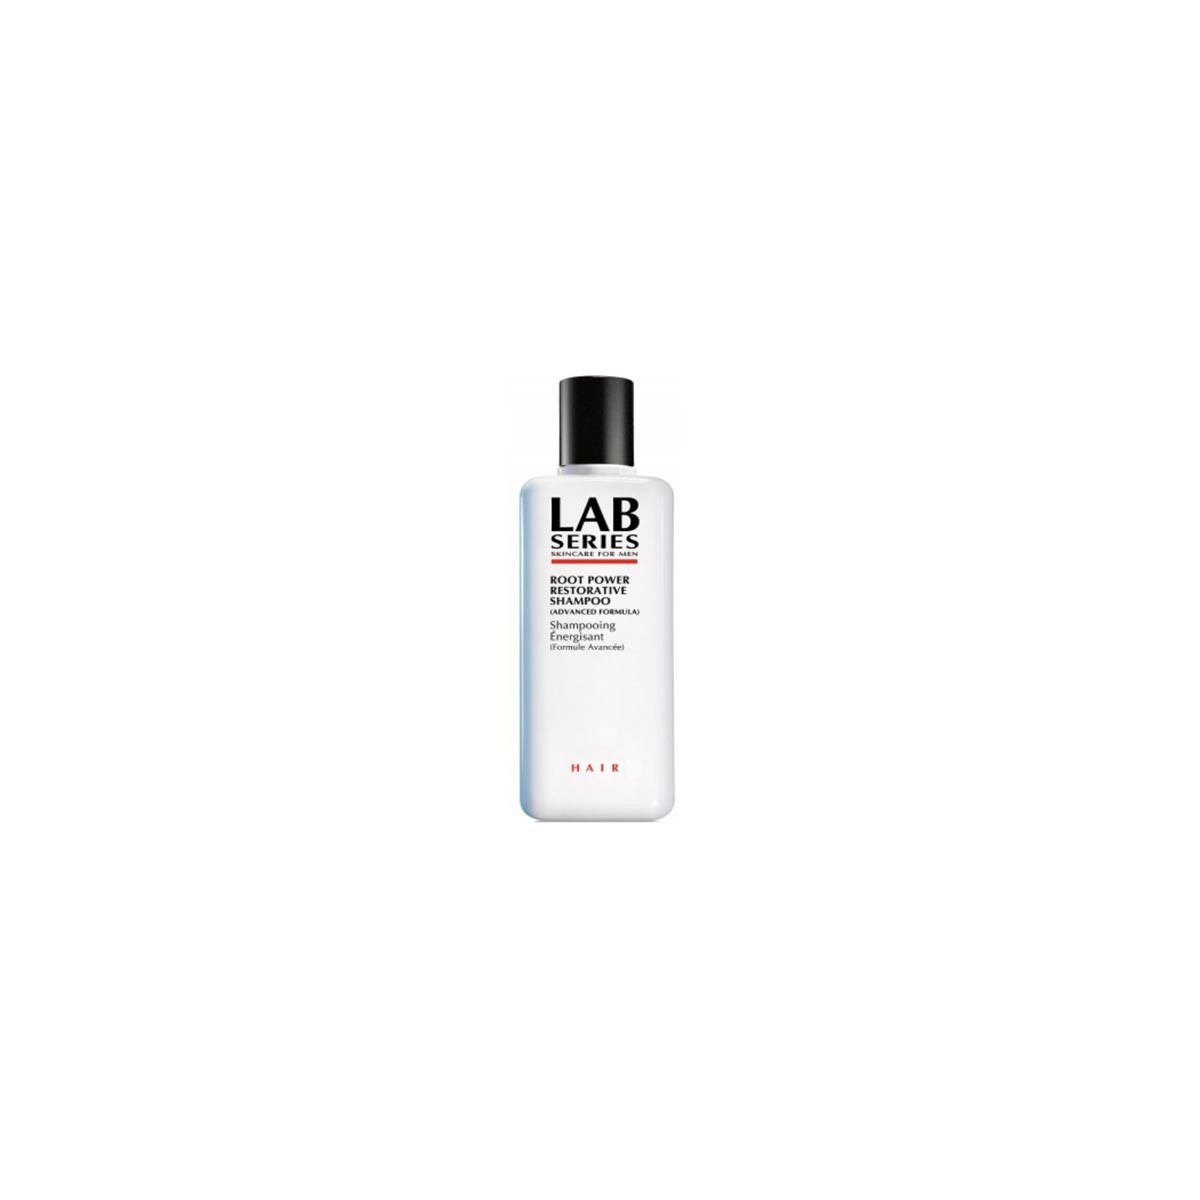 lab-series-root-power-restorative-shampoo-250ml